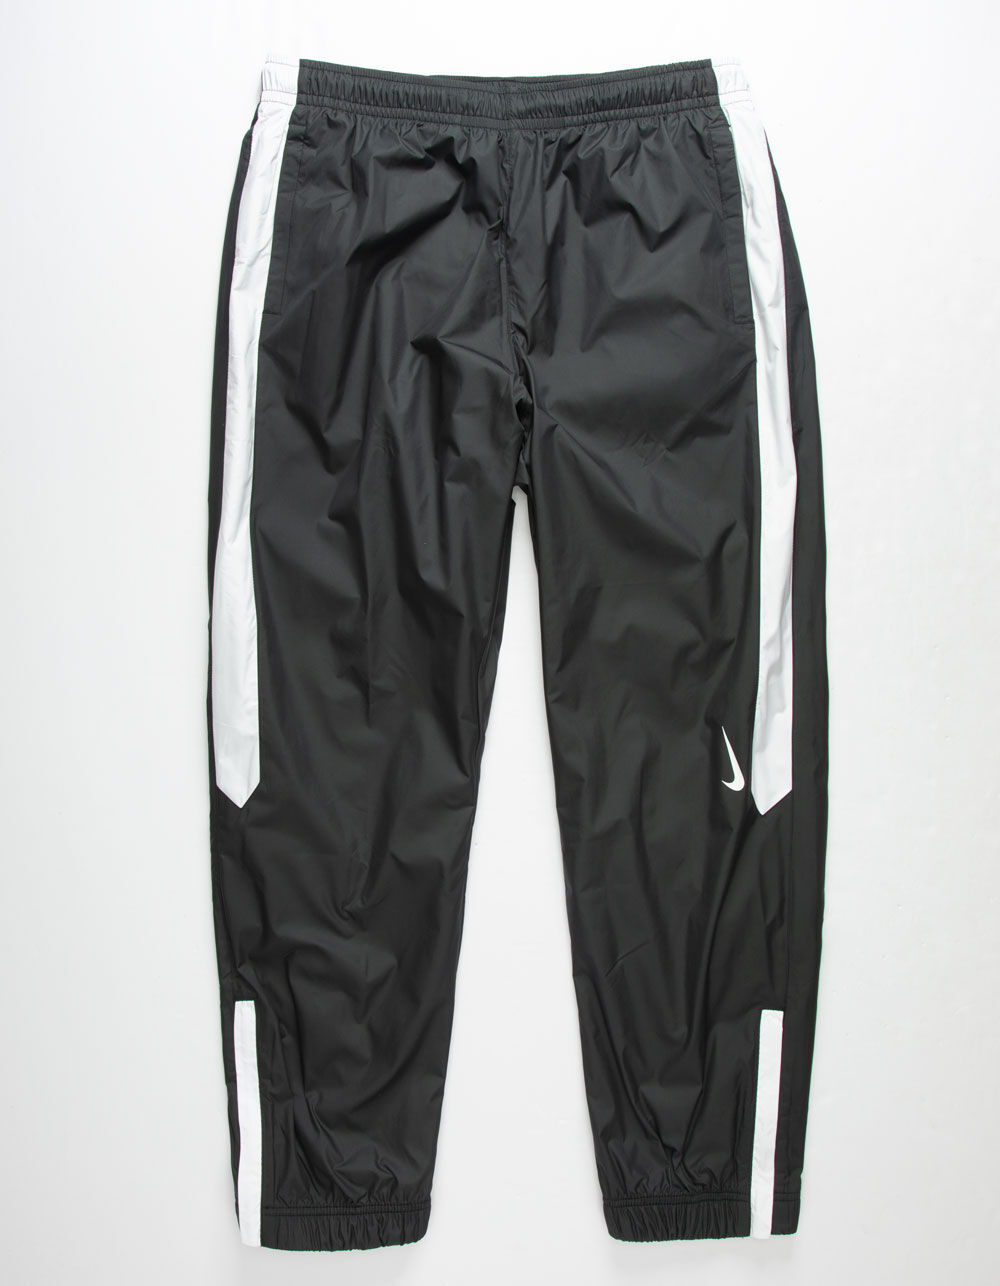  Nike Men's Swift Shield Running Pants CU7857 (Black